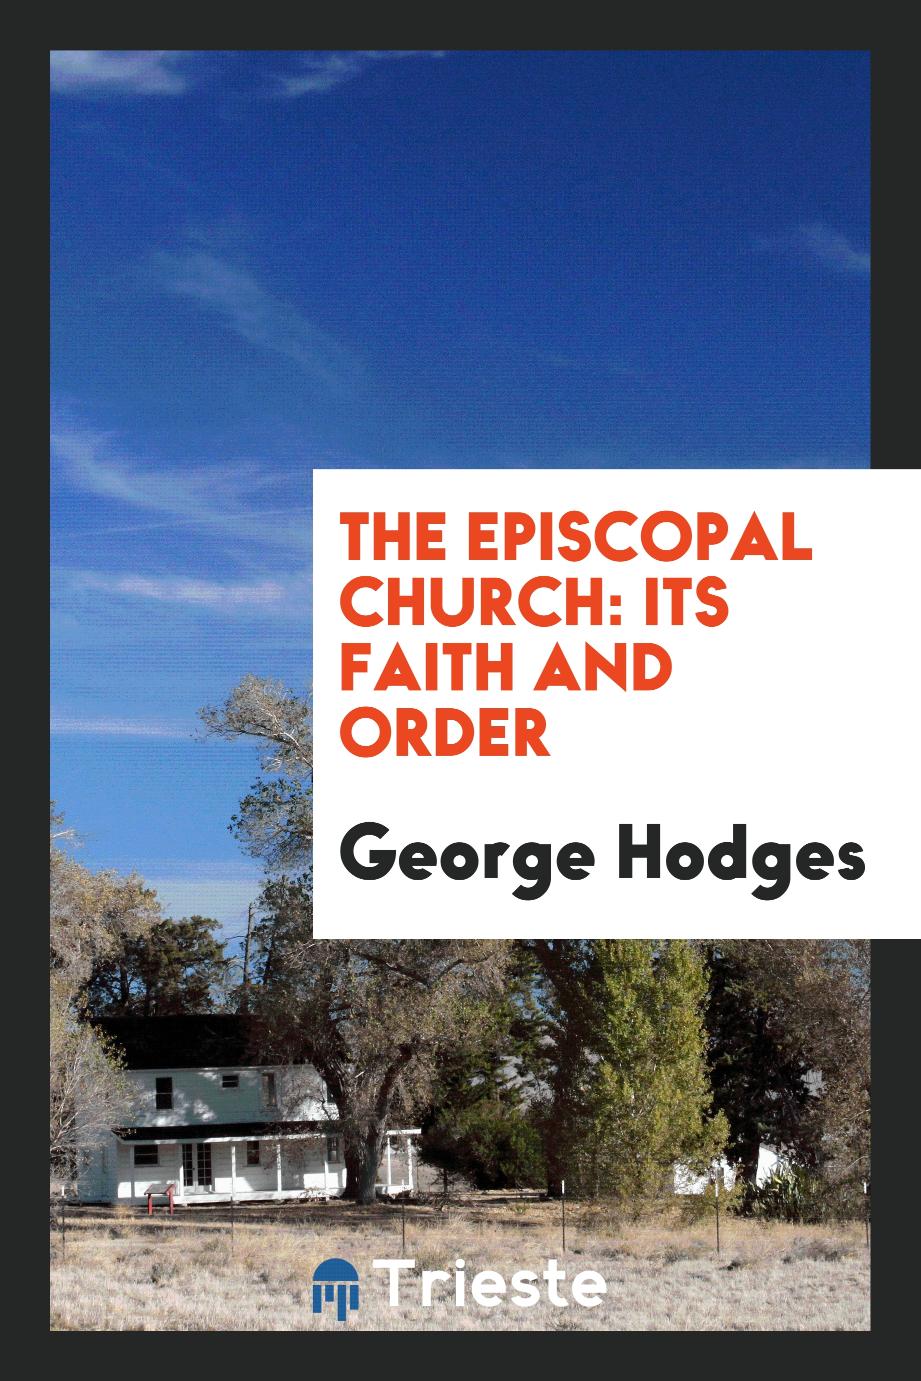 The Episcopal church: its faith and order